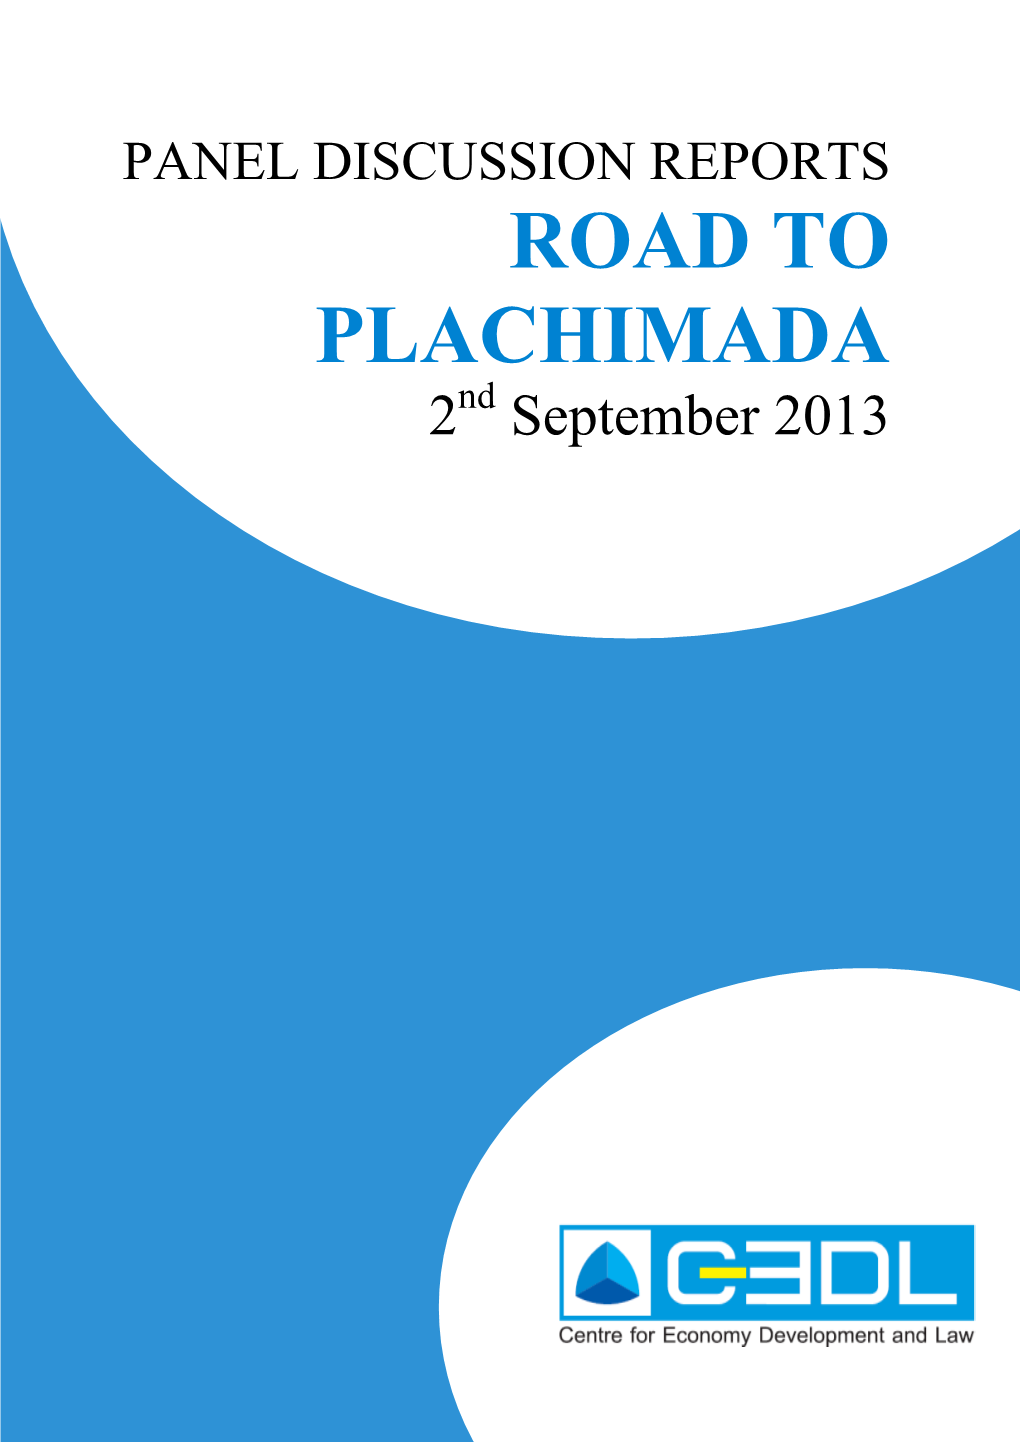 Road to Plachimada 2013